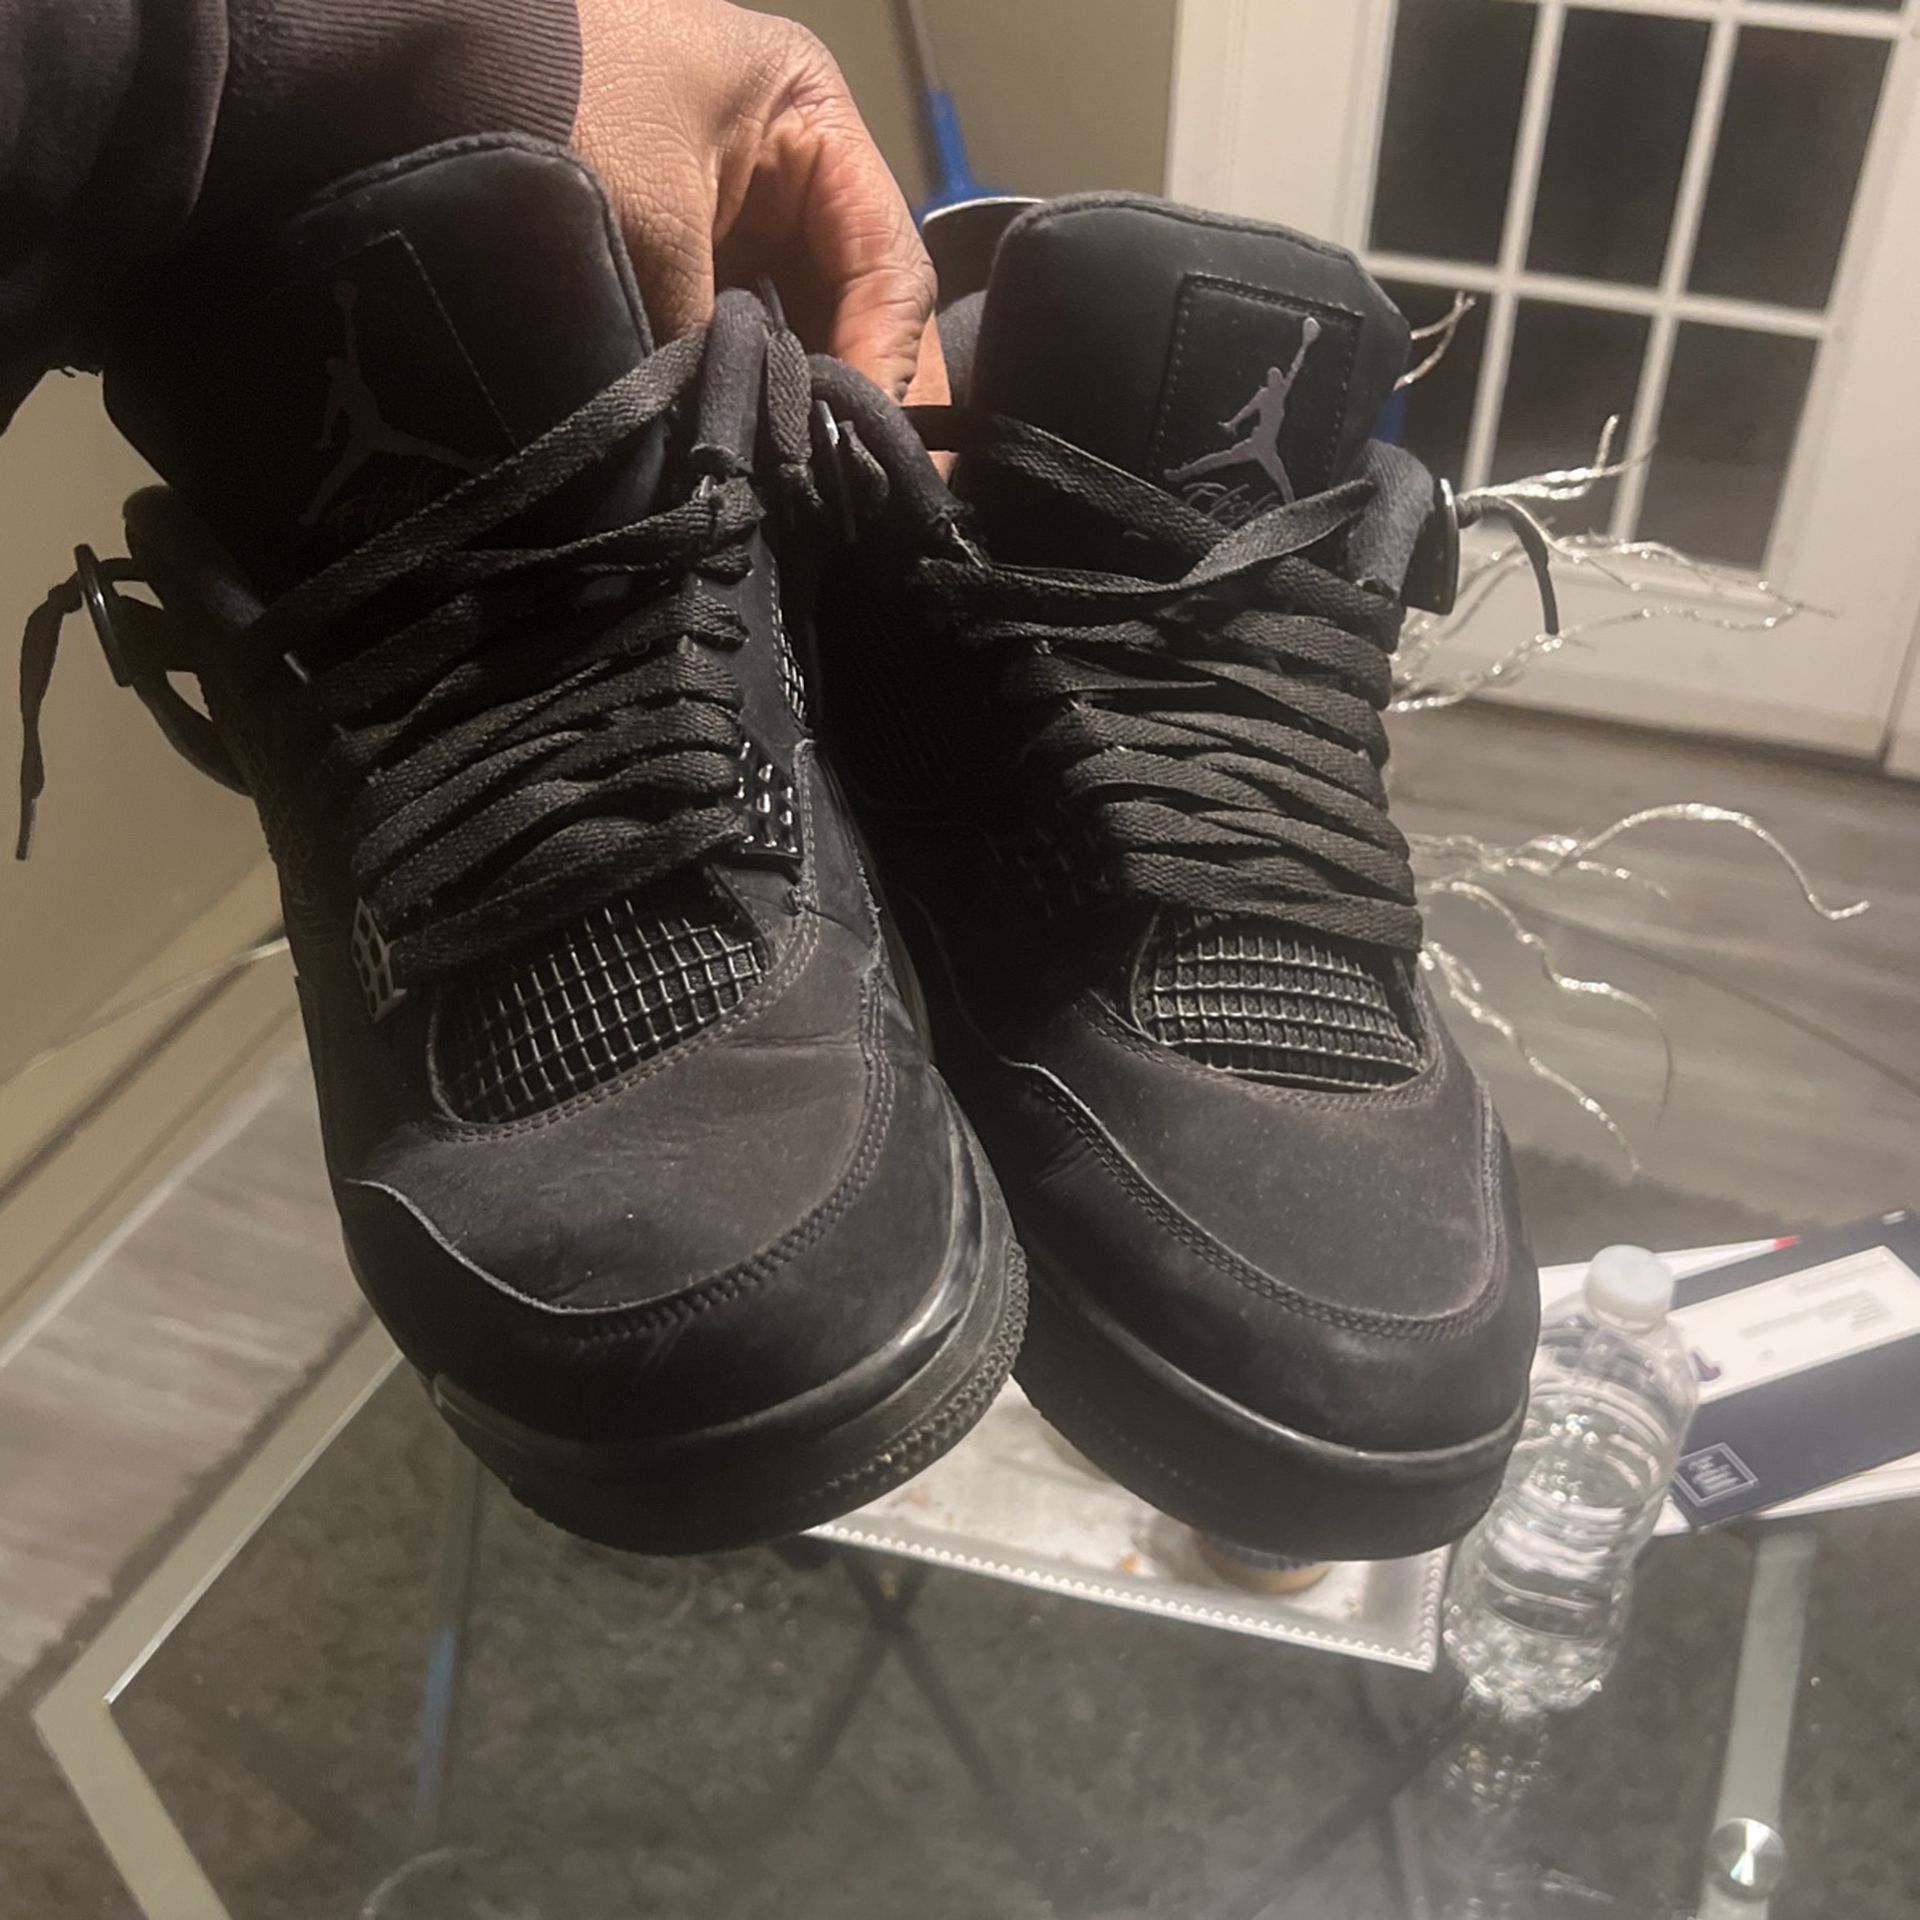 Nike Air Jordan 4 Black Cat Size 12 for Sale in Lancaster, PA